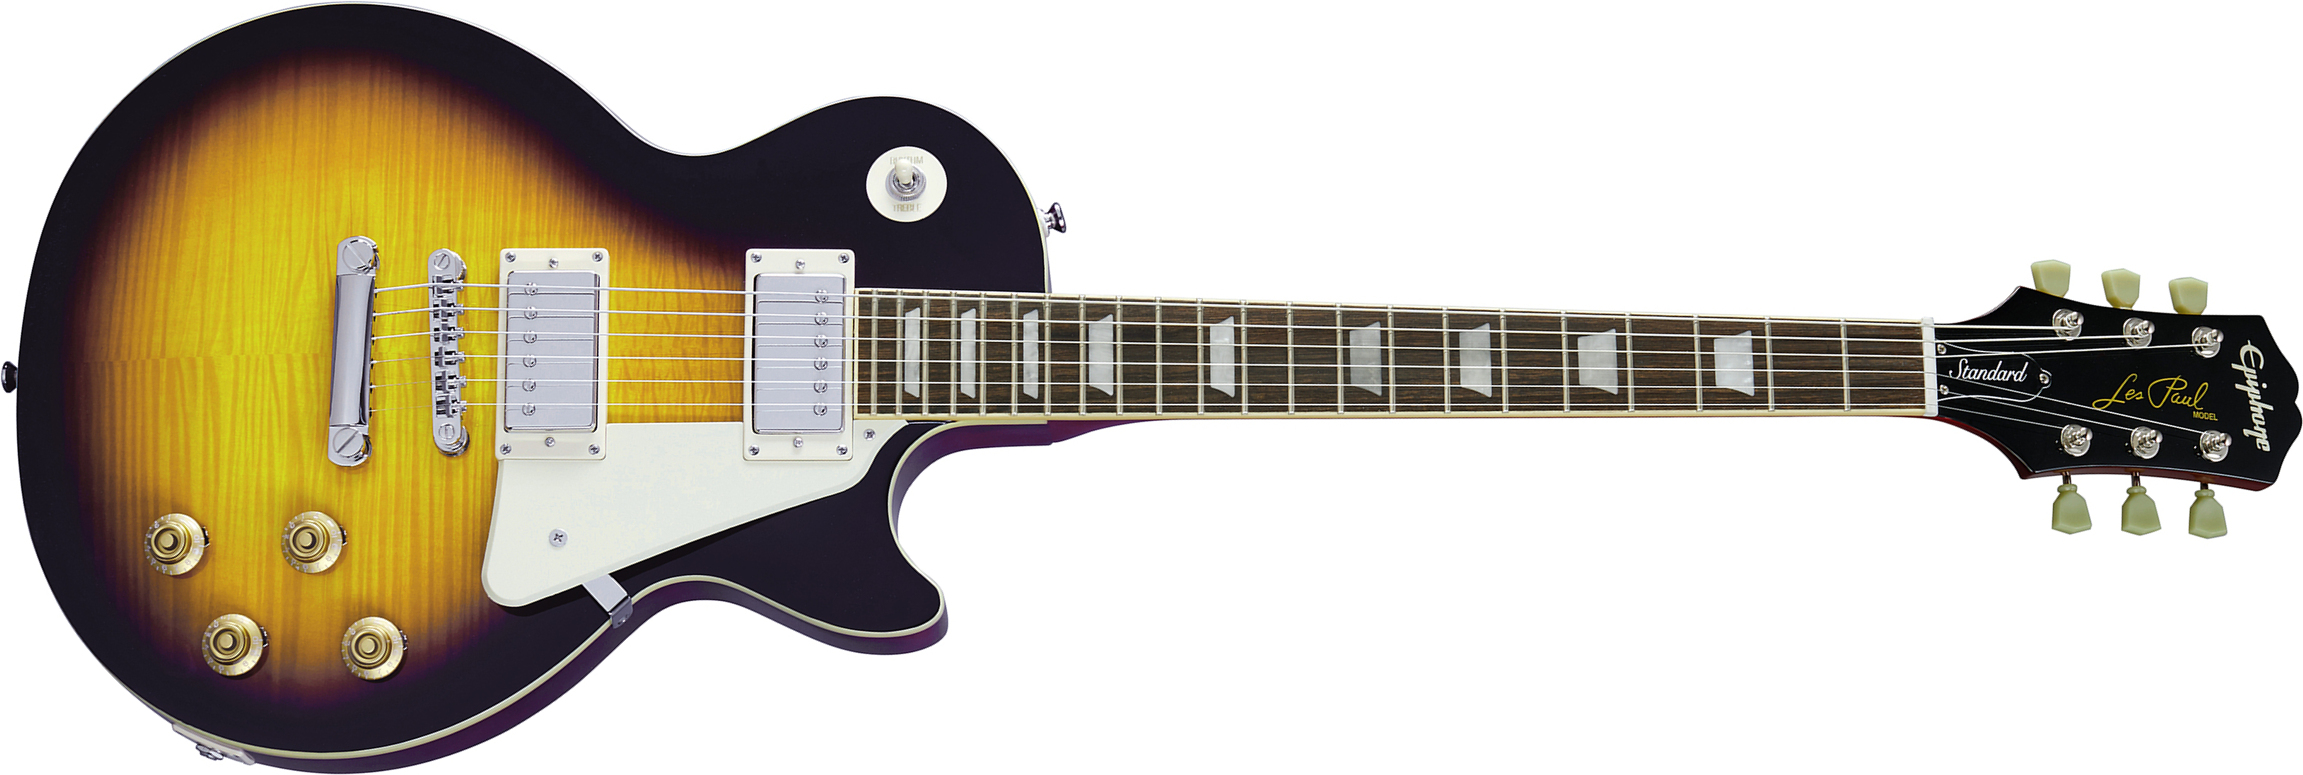 Epiphone Les Paul Standard 50s 2h Ht Rw - Vintage Sunburst - Enkel gesneden elektrische gitaar - Main picture